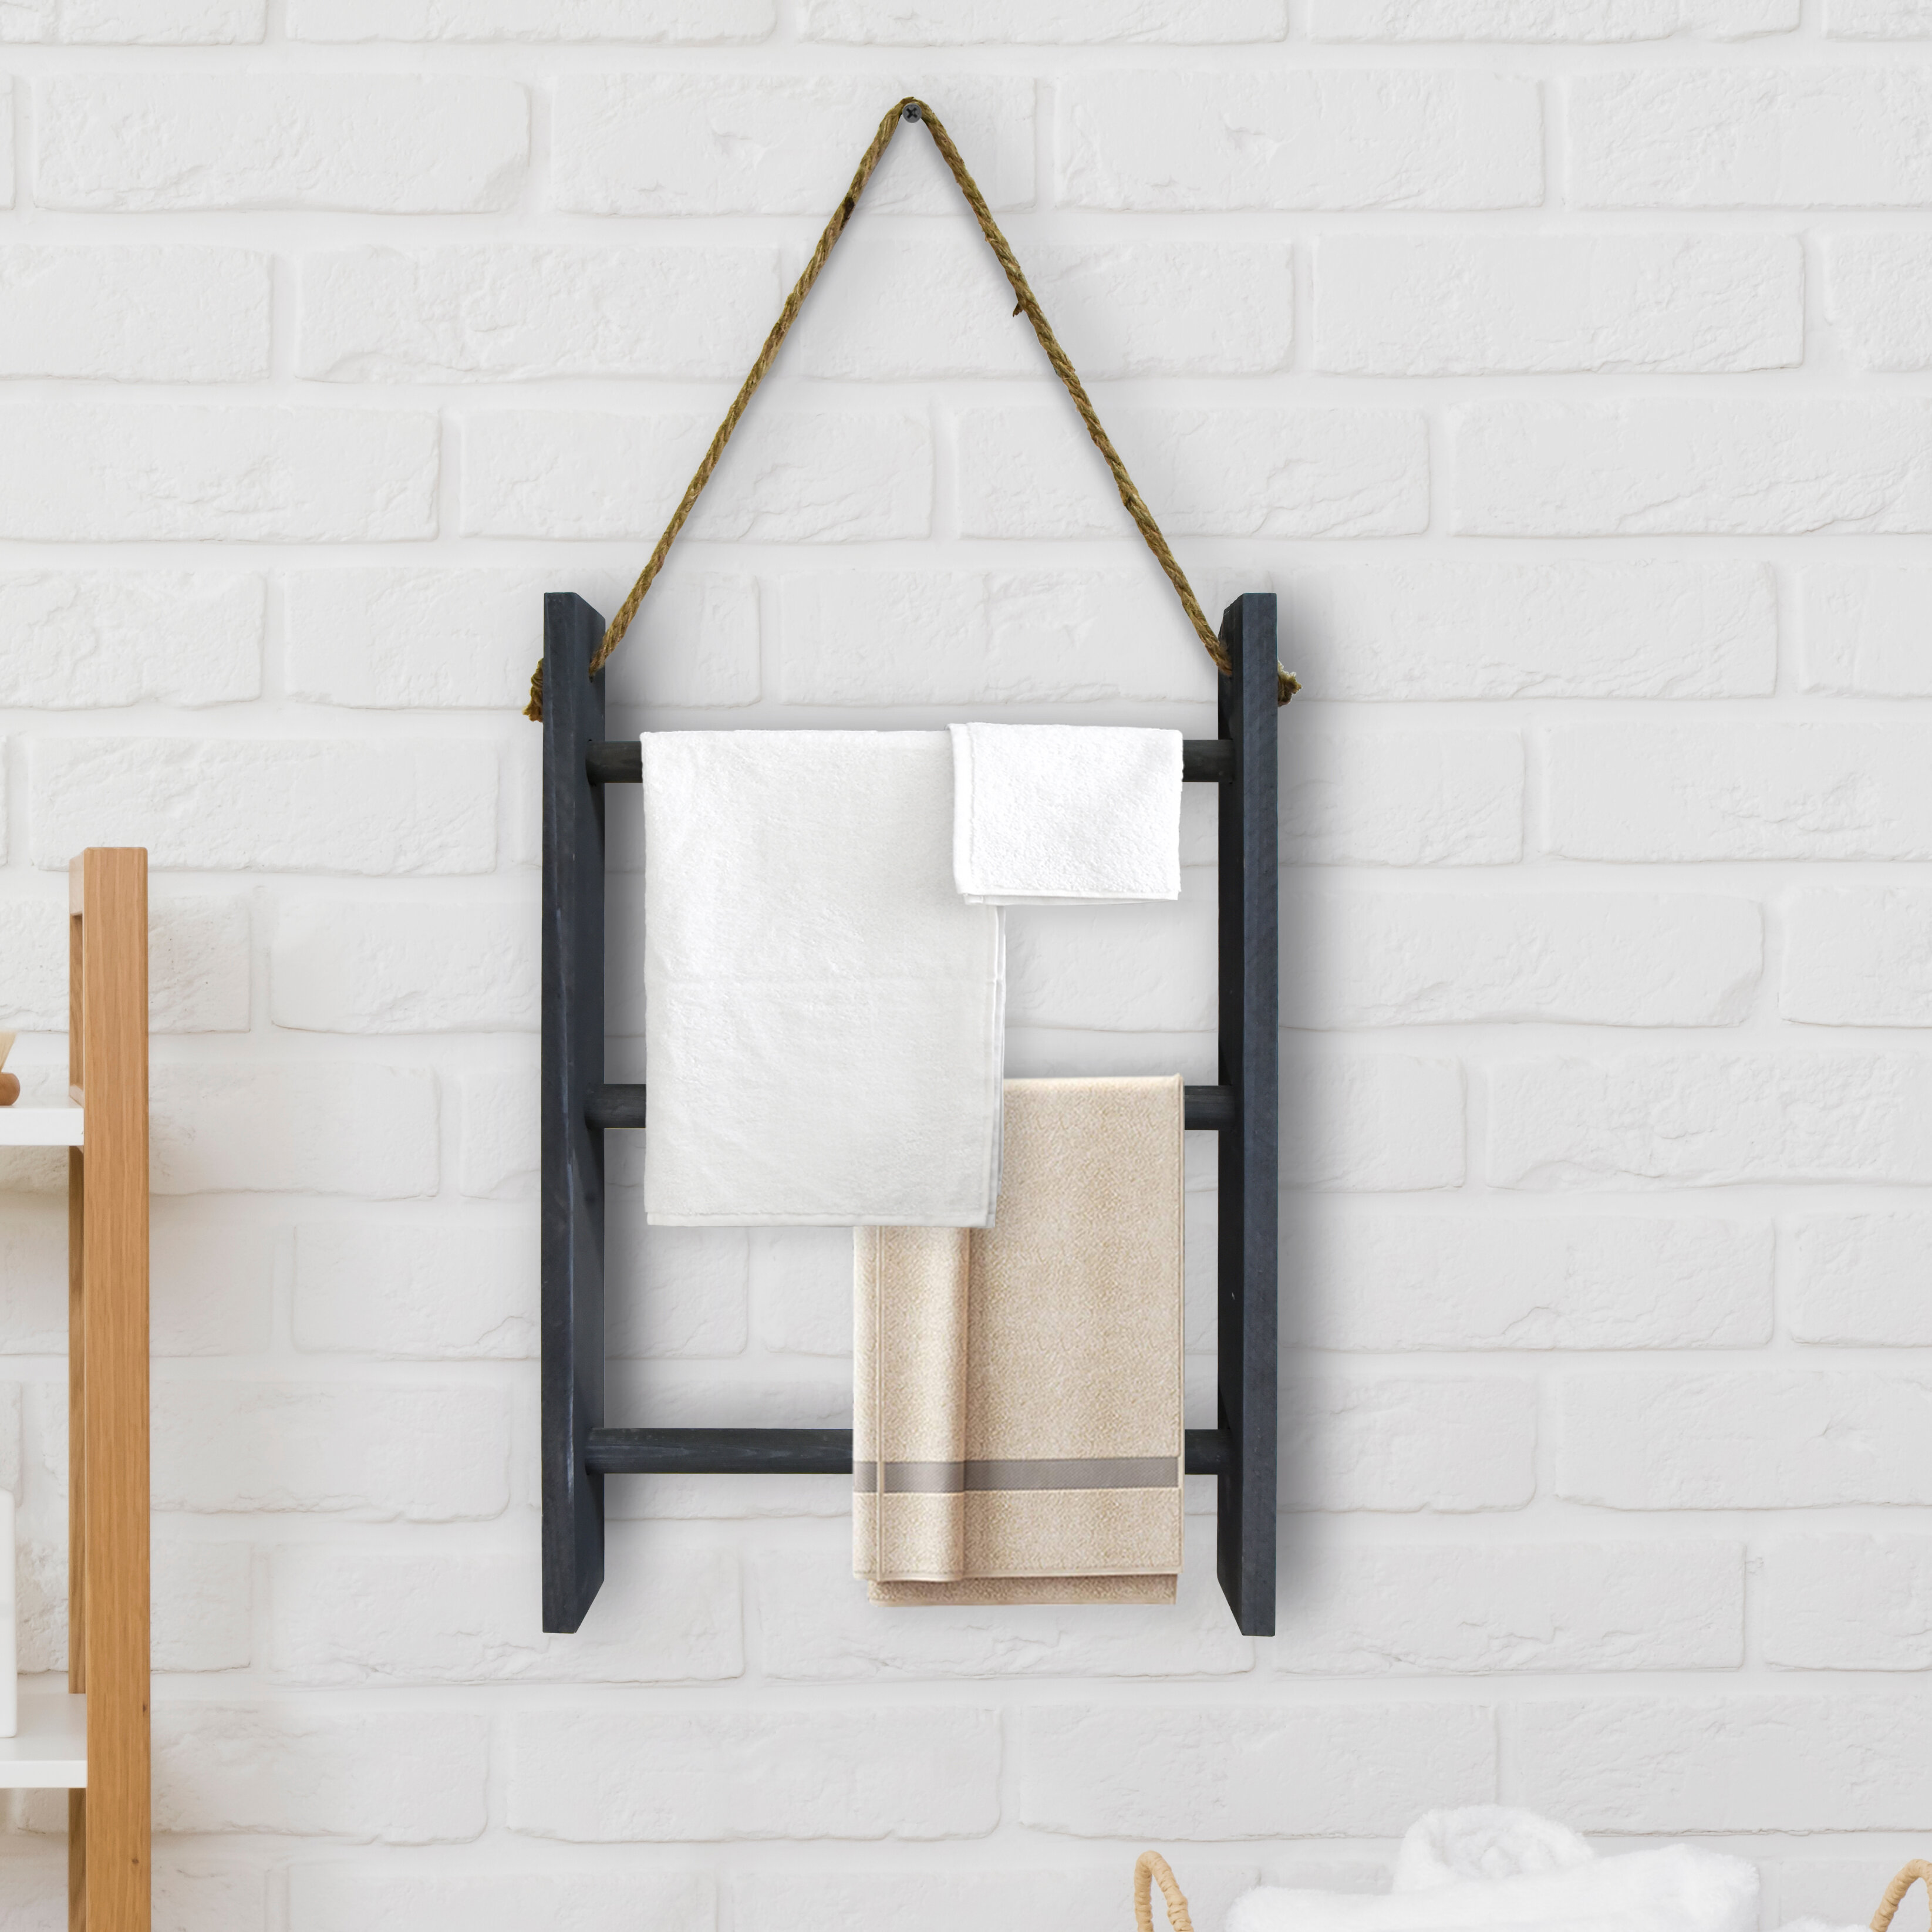 Black Wall-mounted Shelf Decorative Wall Mounted Storage Towel Racks 